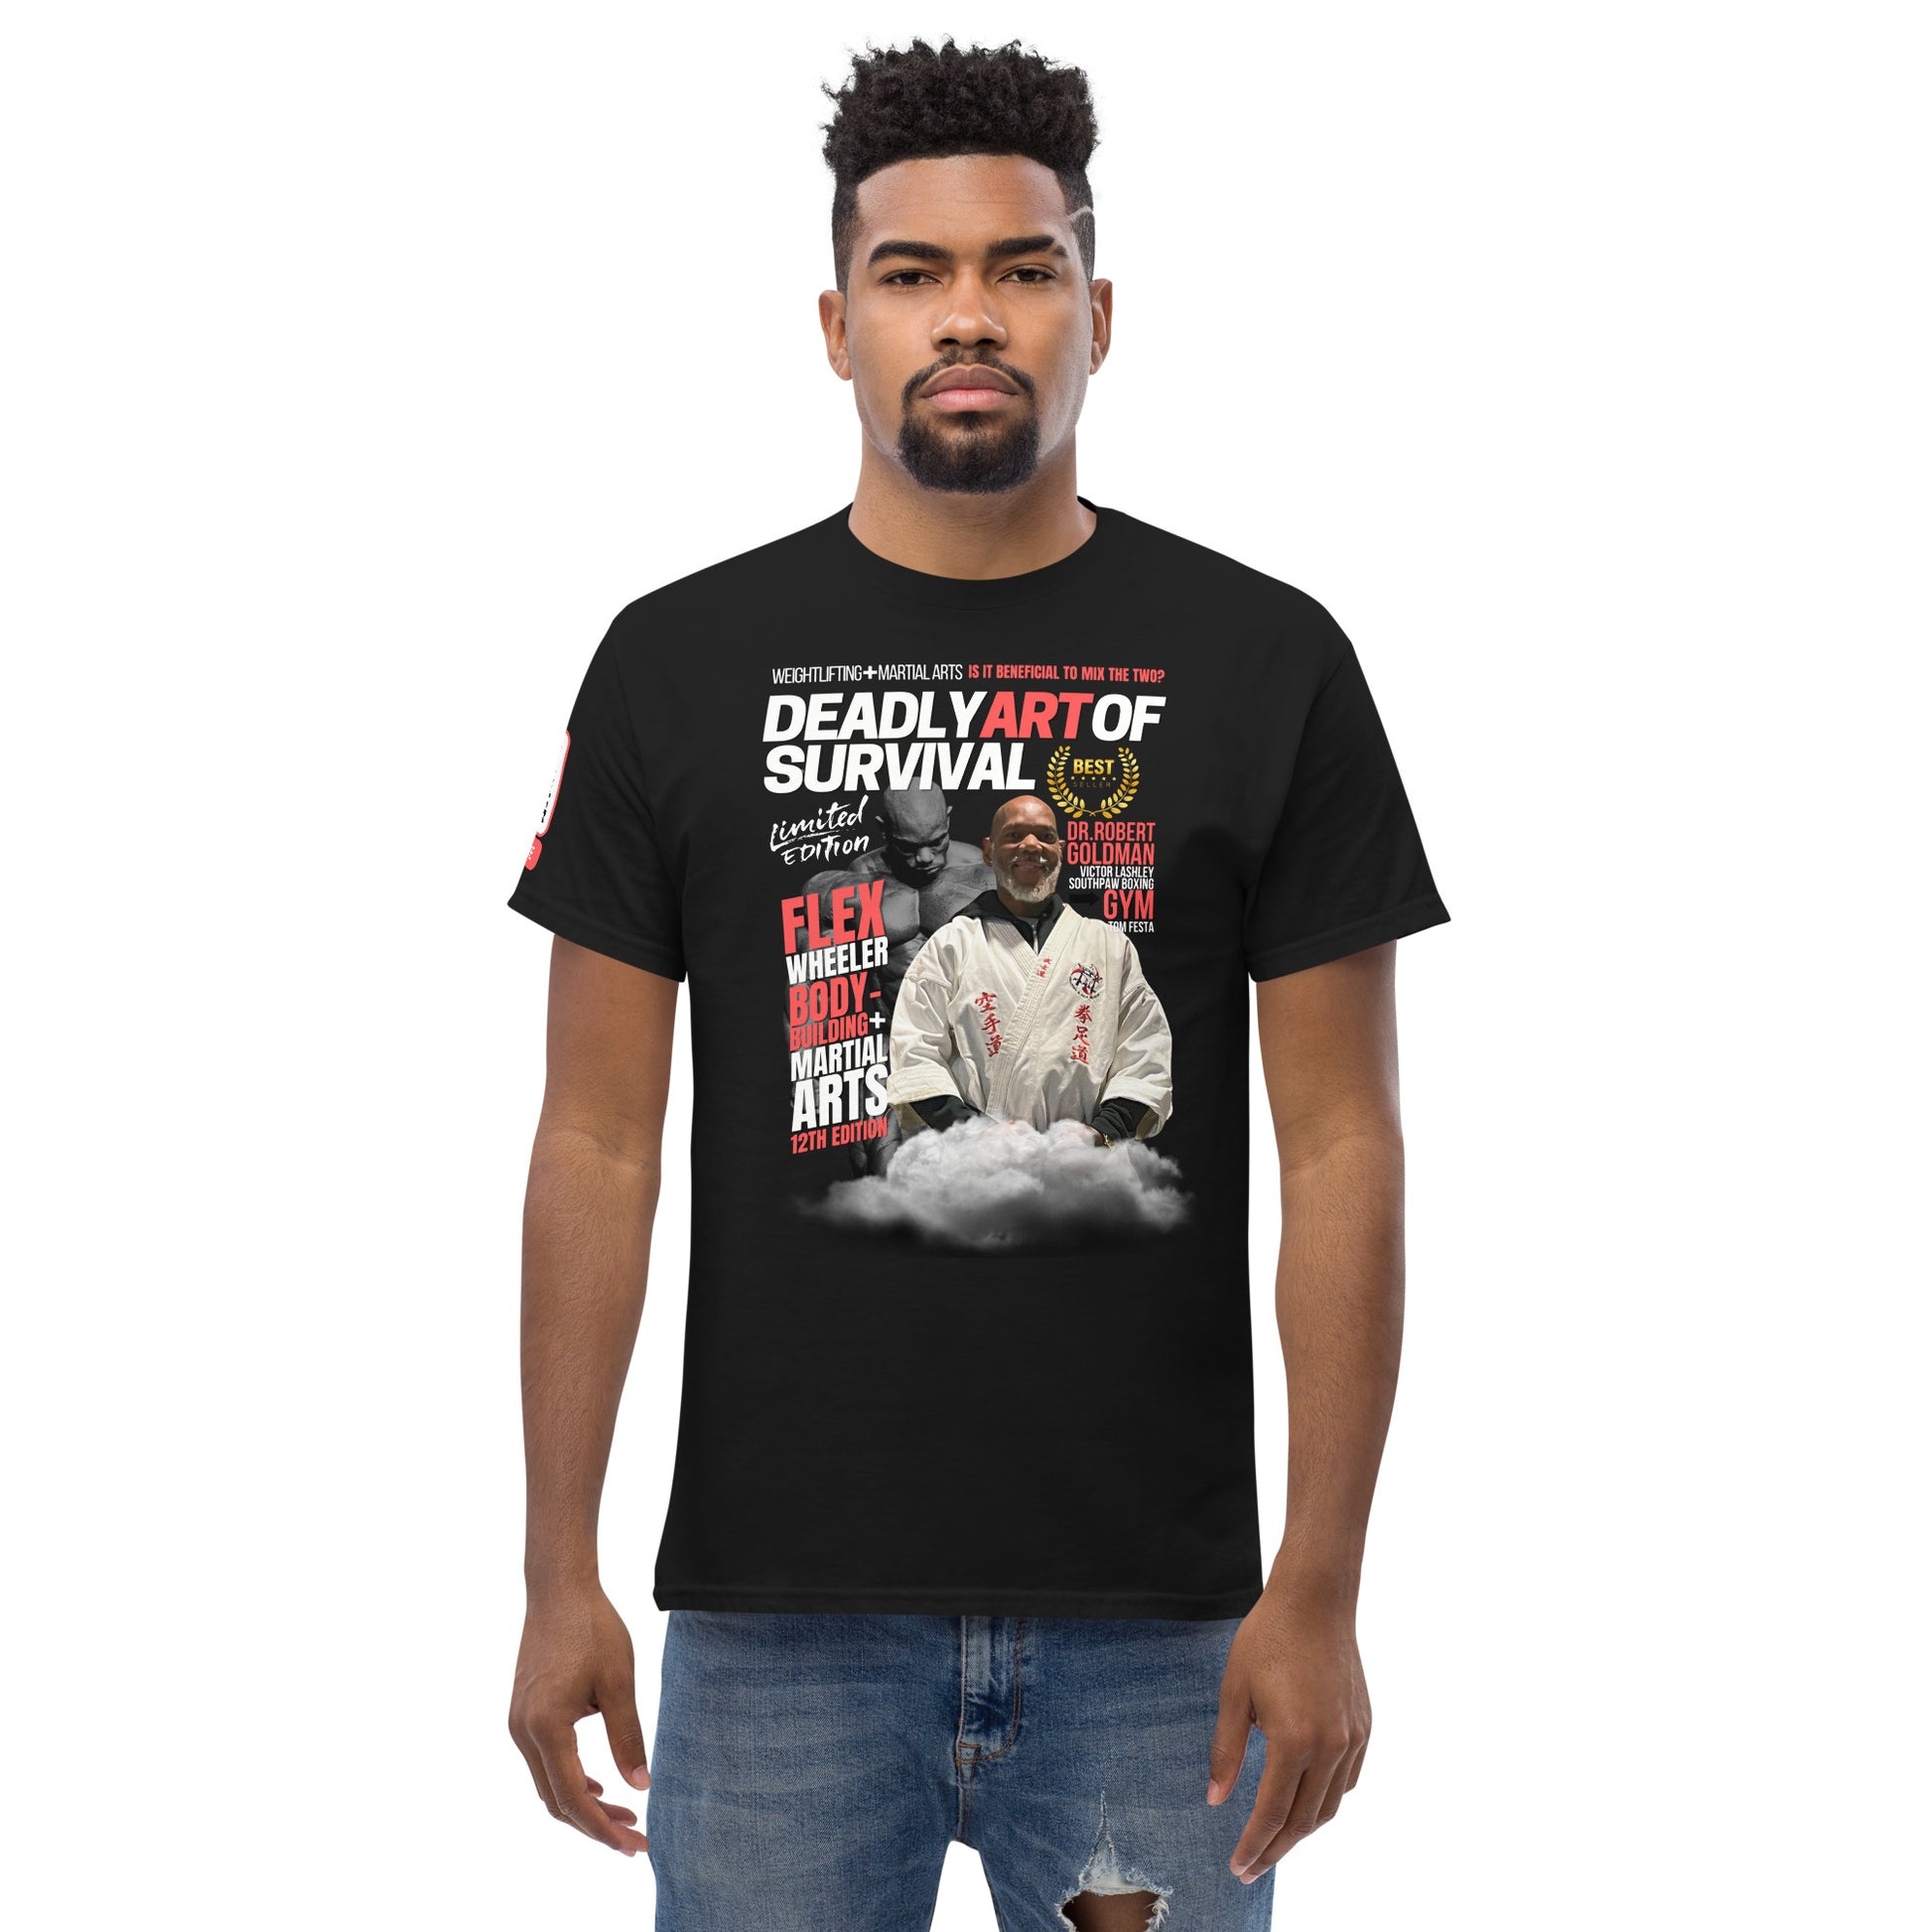 The Flex Edition T-Shirt deadlyartofsurvival.com